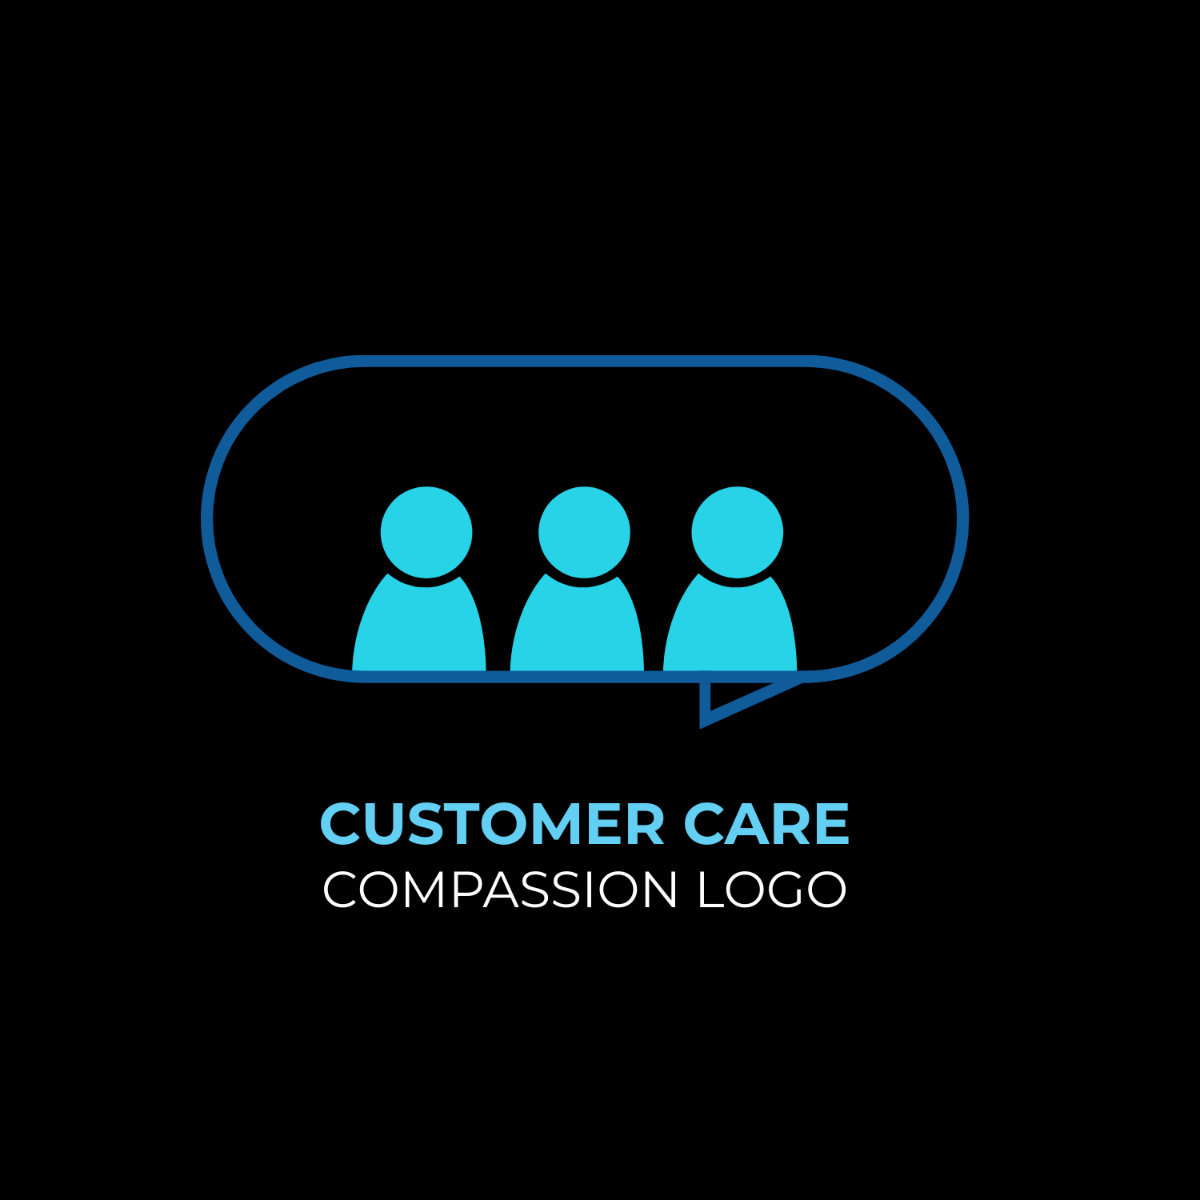 Customer Care Compassion Logo Template